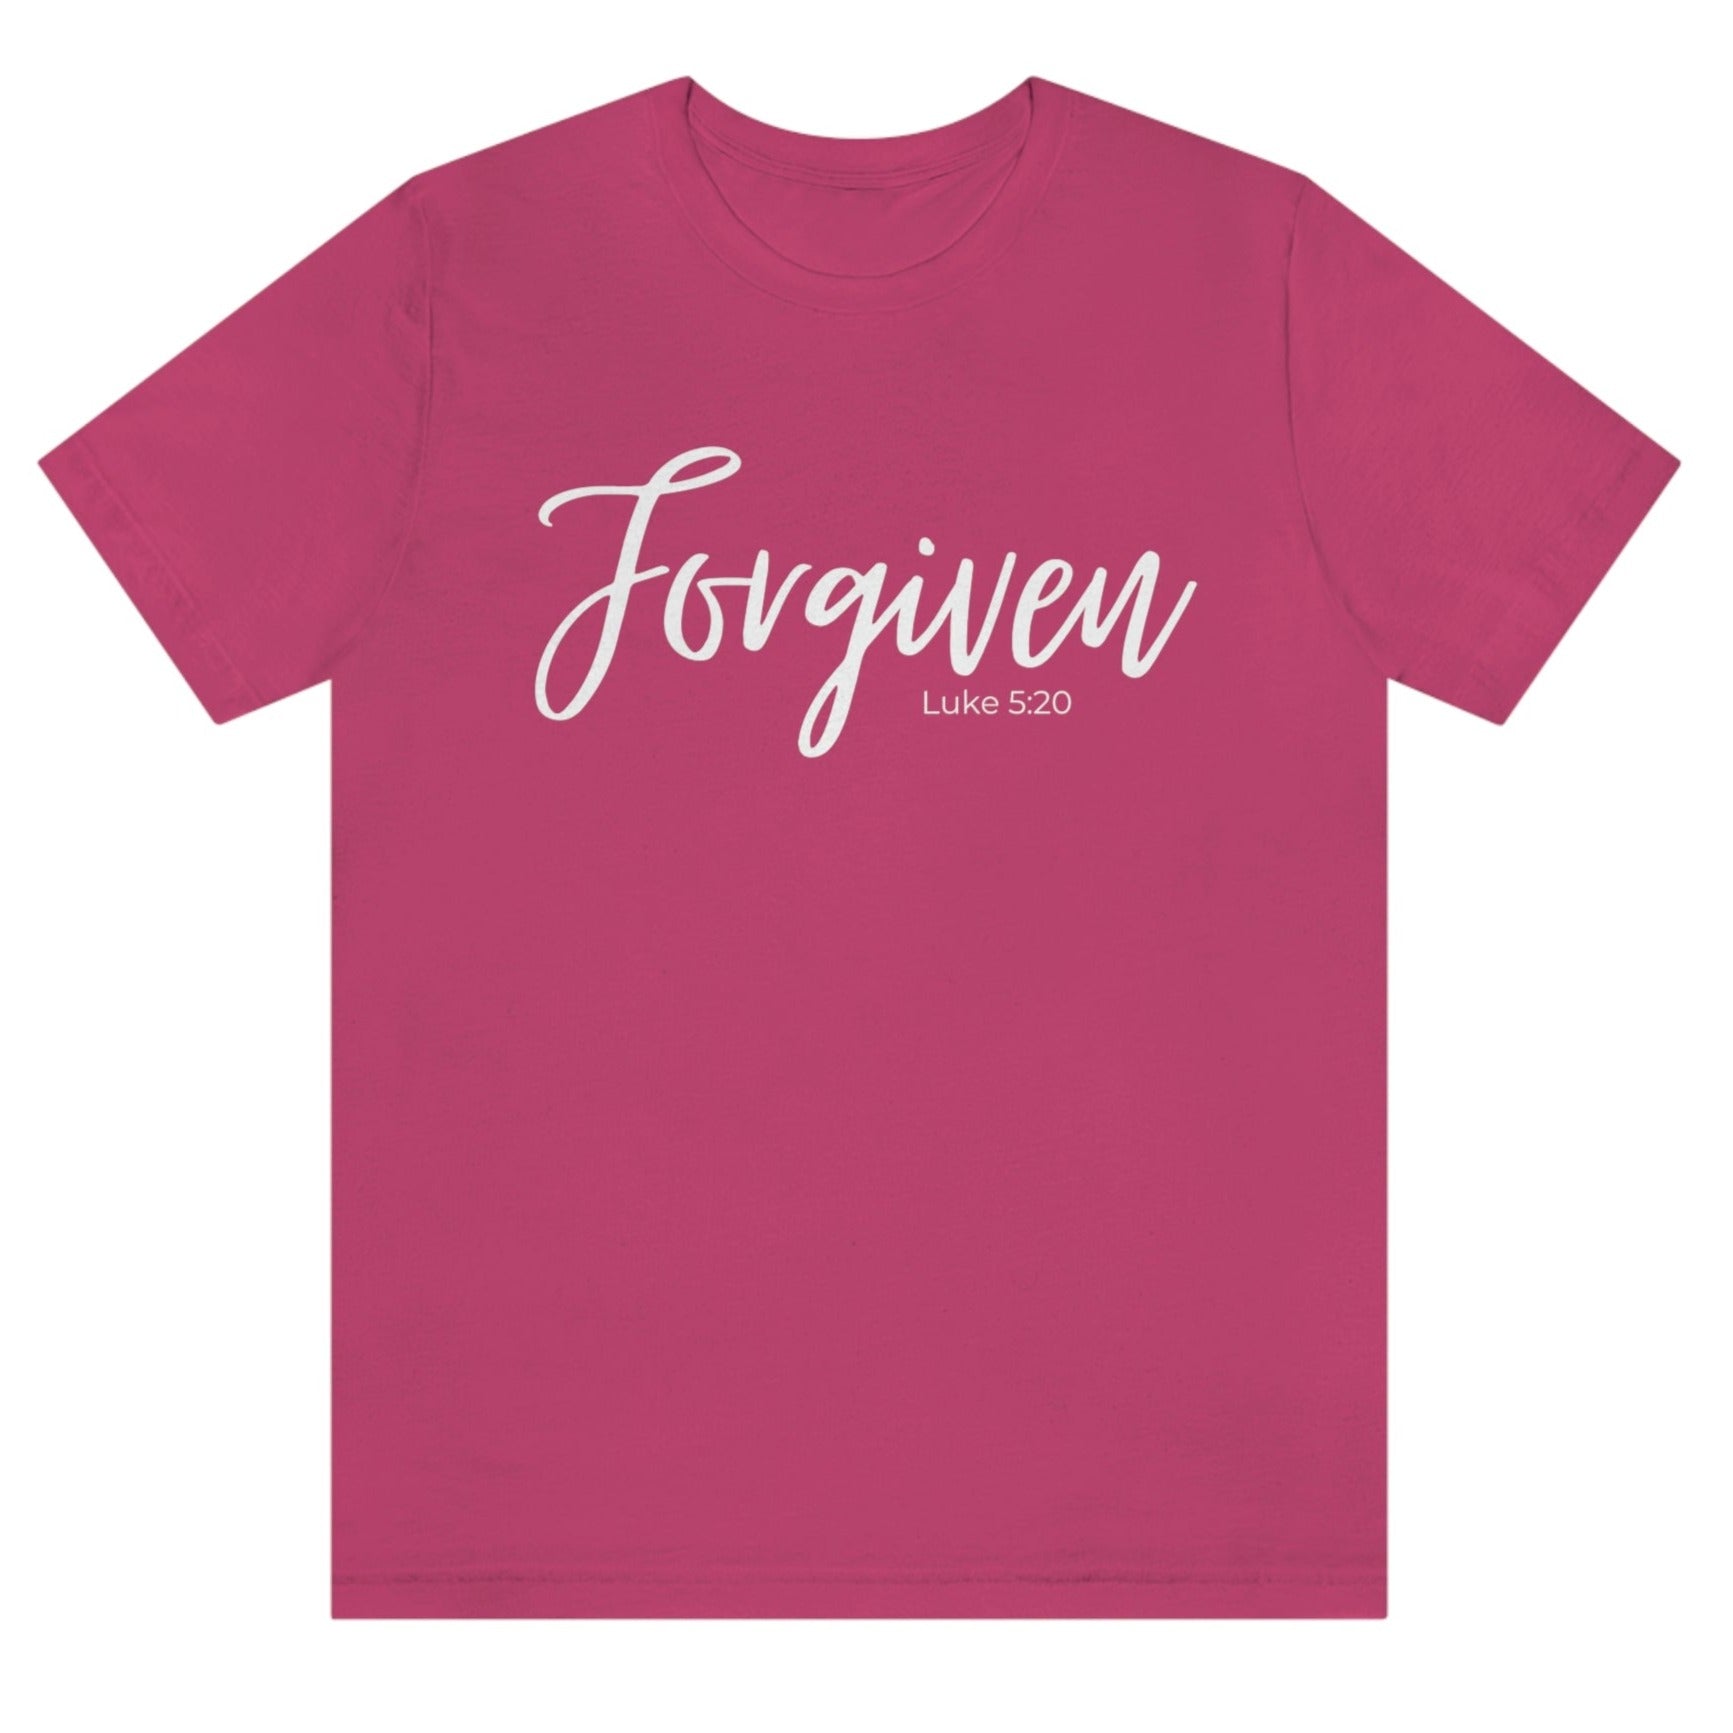 forgiven-luke-5-20-berry-t-shirt-unisex-inspiring-christian